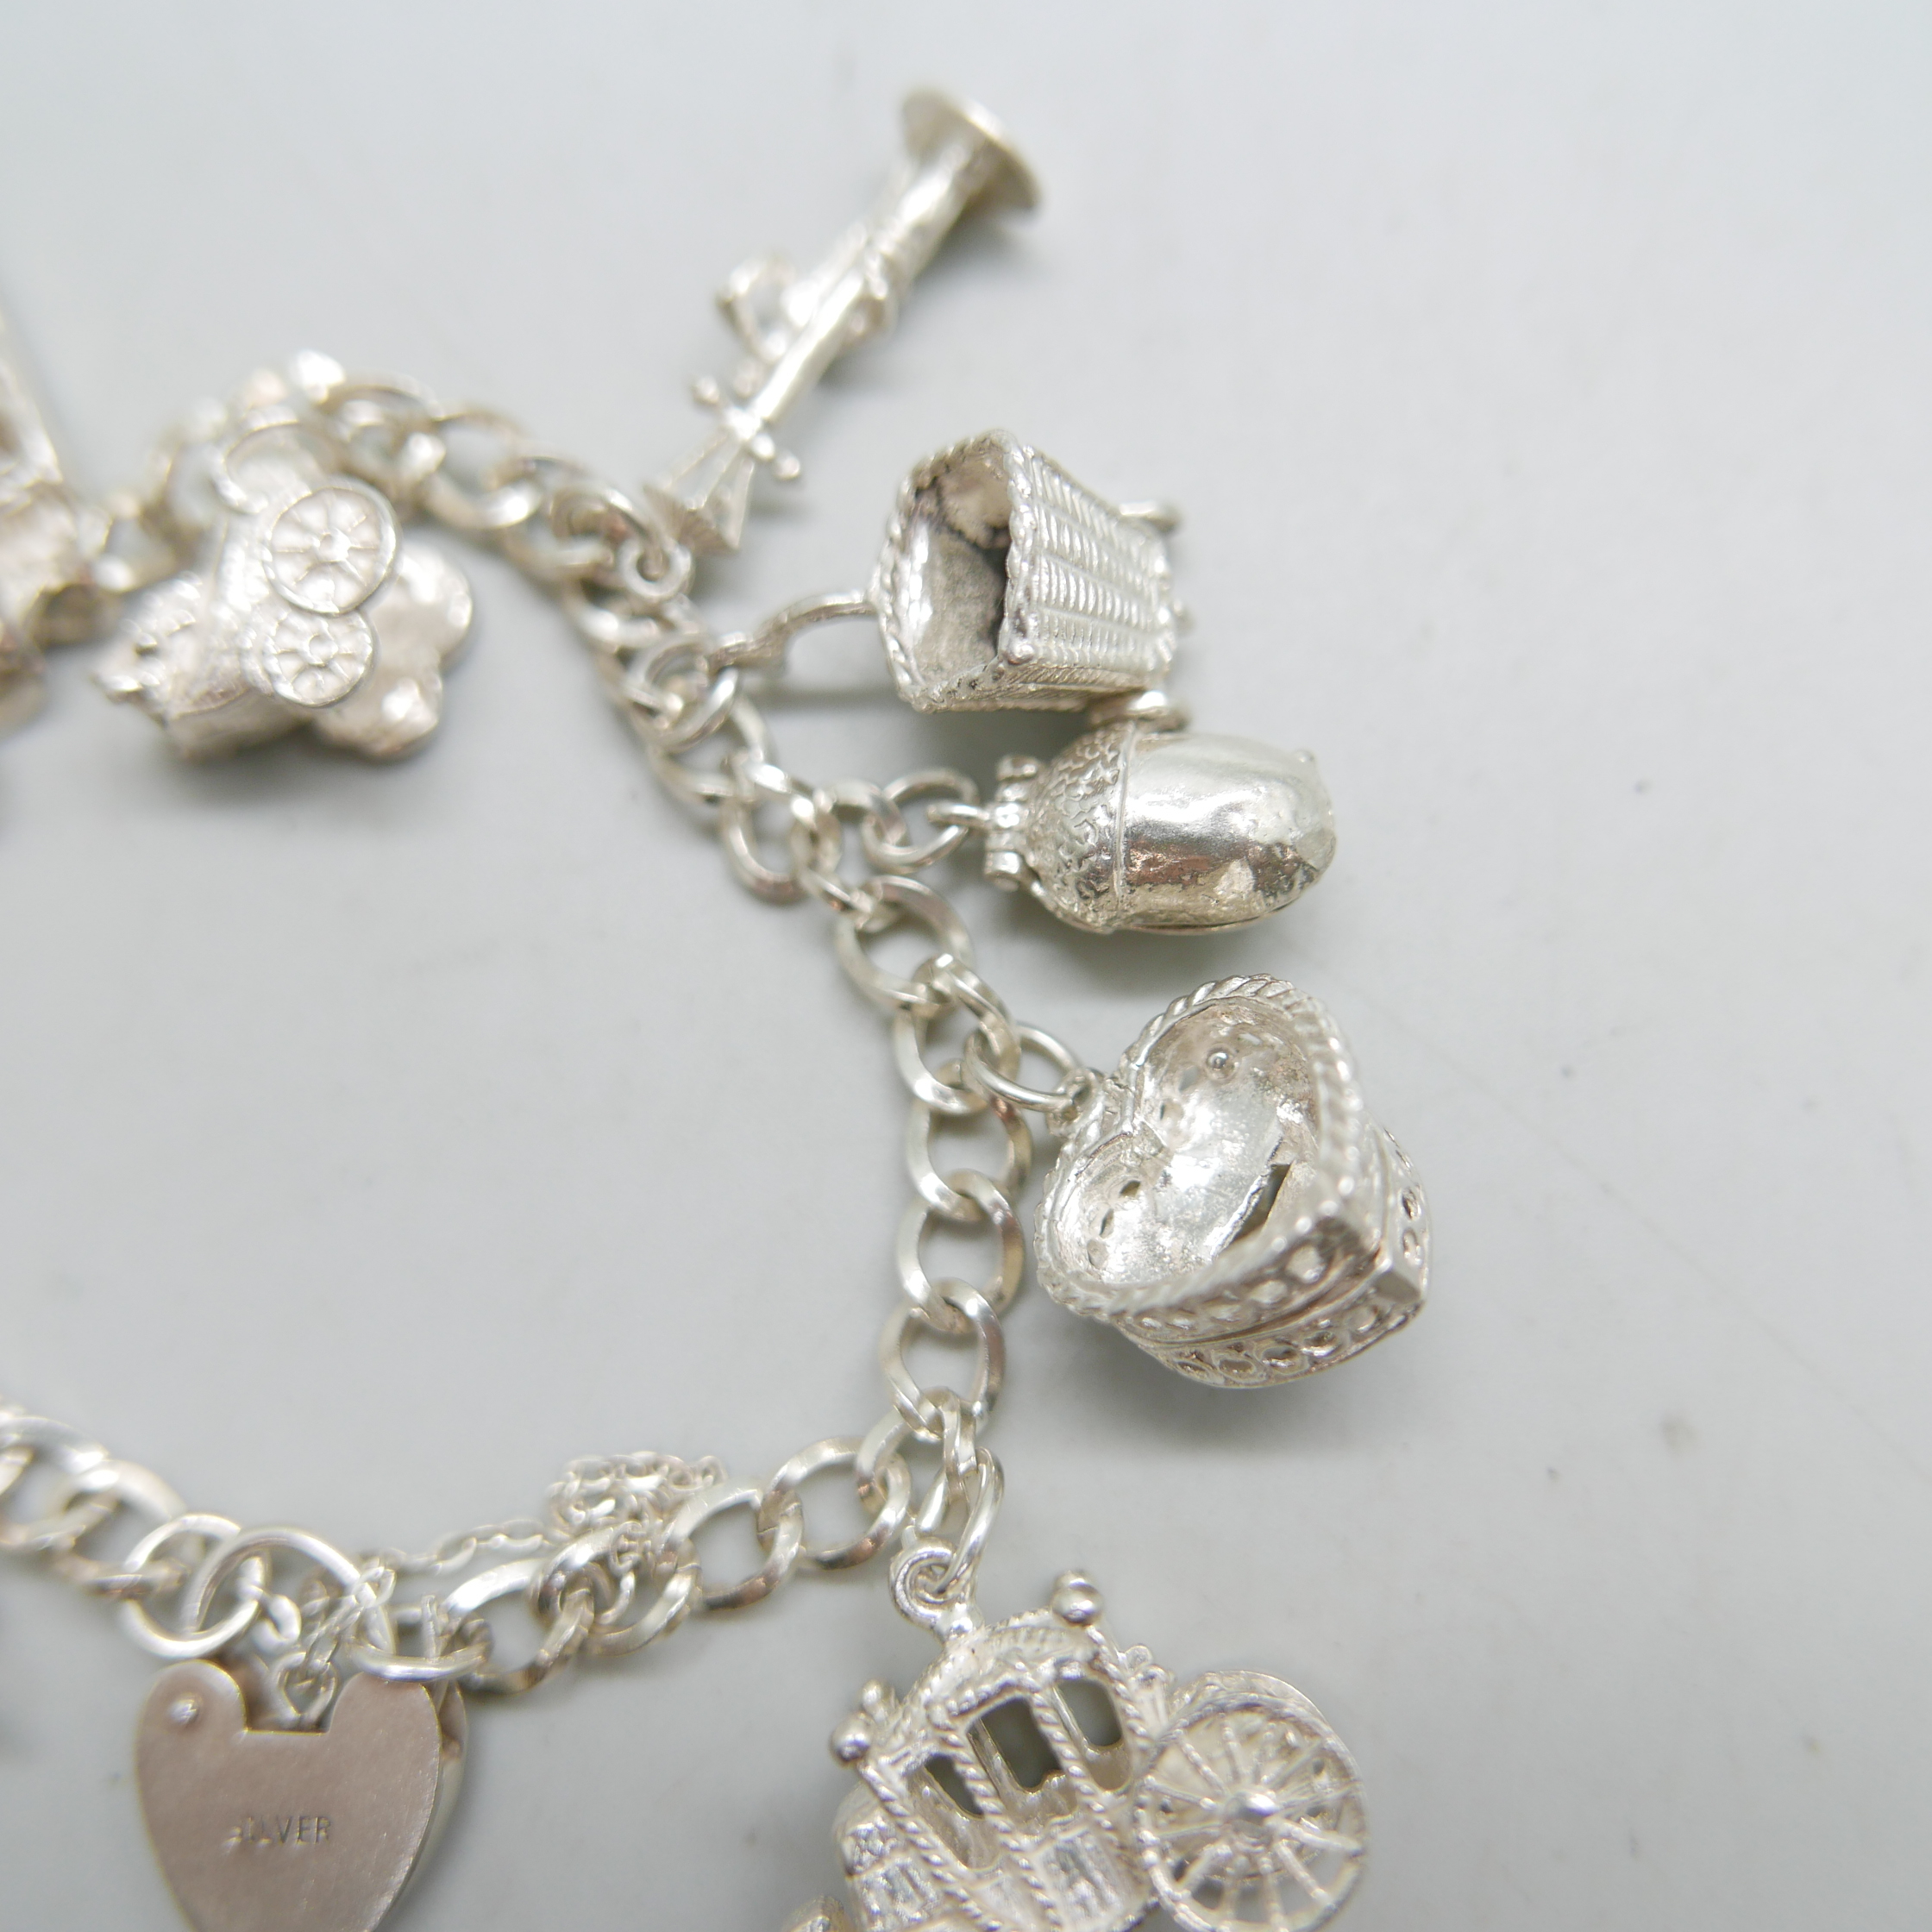 A silver charm bracelet, 50g - Image 3 of 5